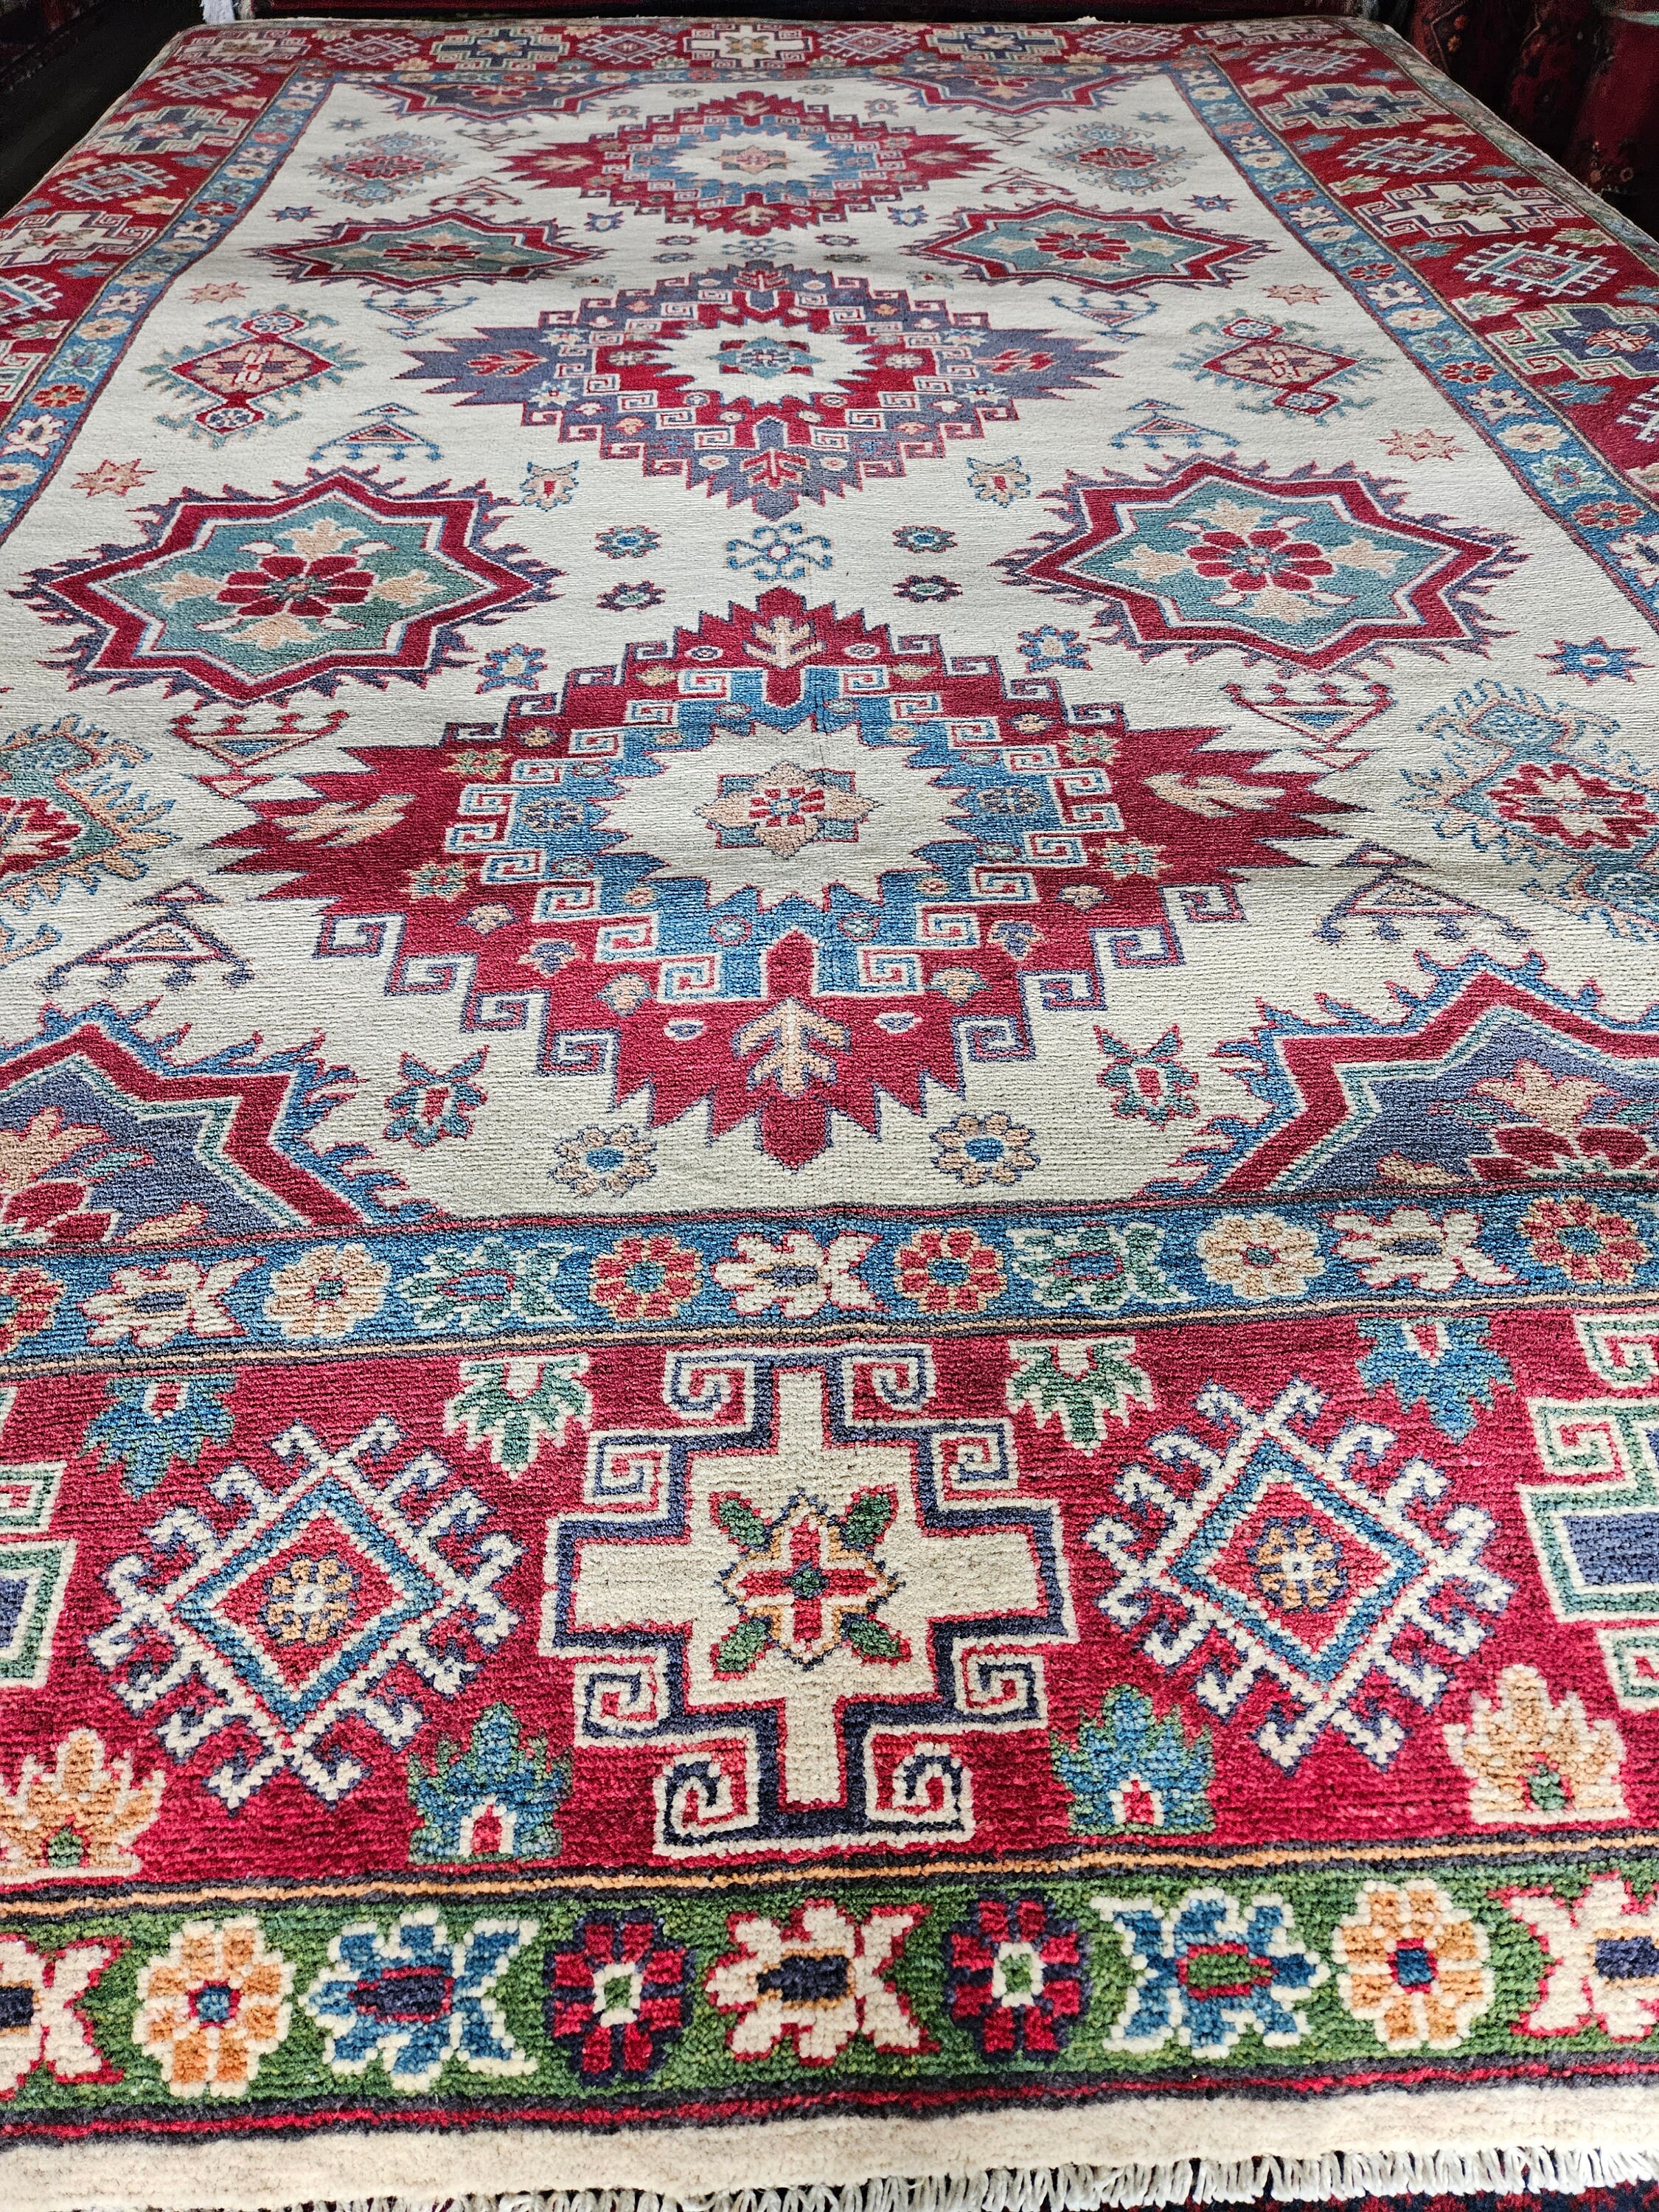 Kazak Rug 6.8X9.9 Ft dusty rose rug, wall hanging, rug runner, decorative rug, abstract accent rug, bedroom rug,teal rug, living room rug